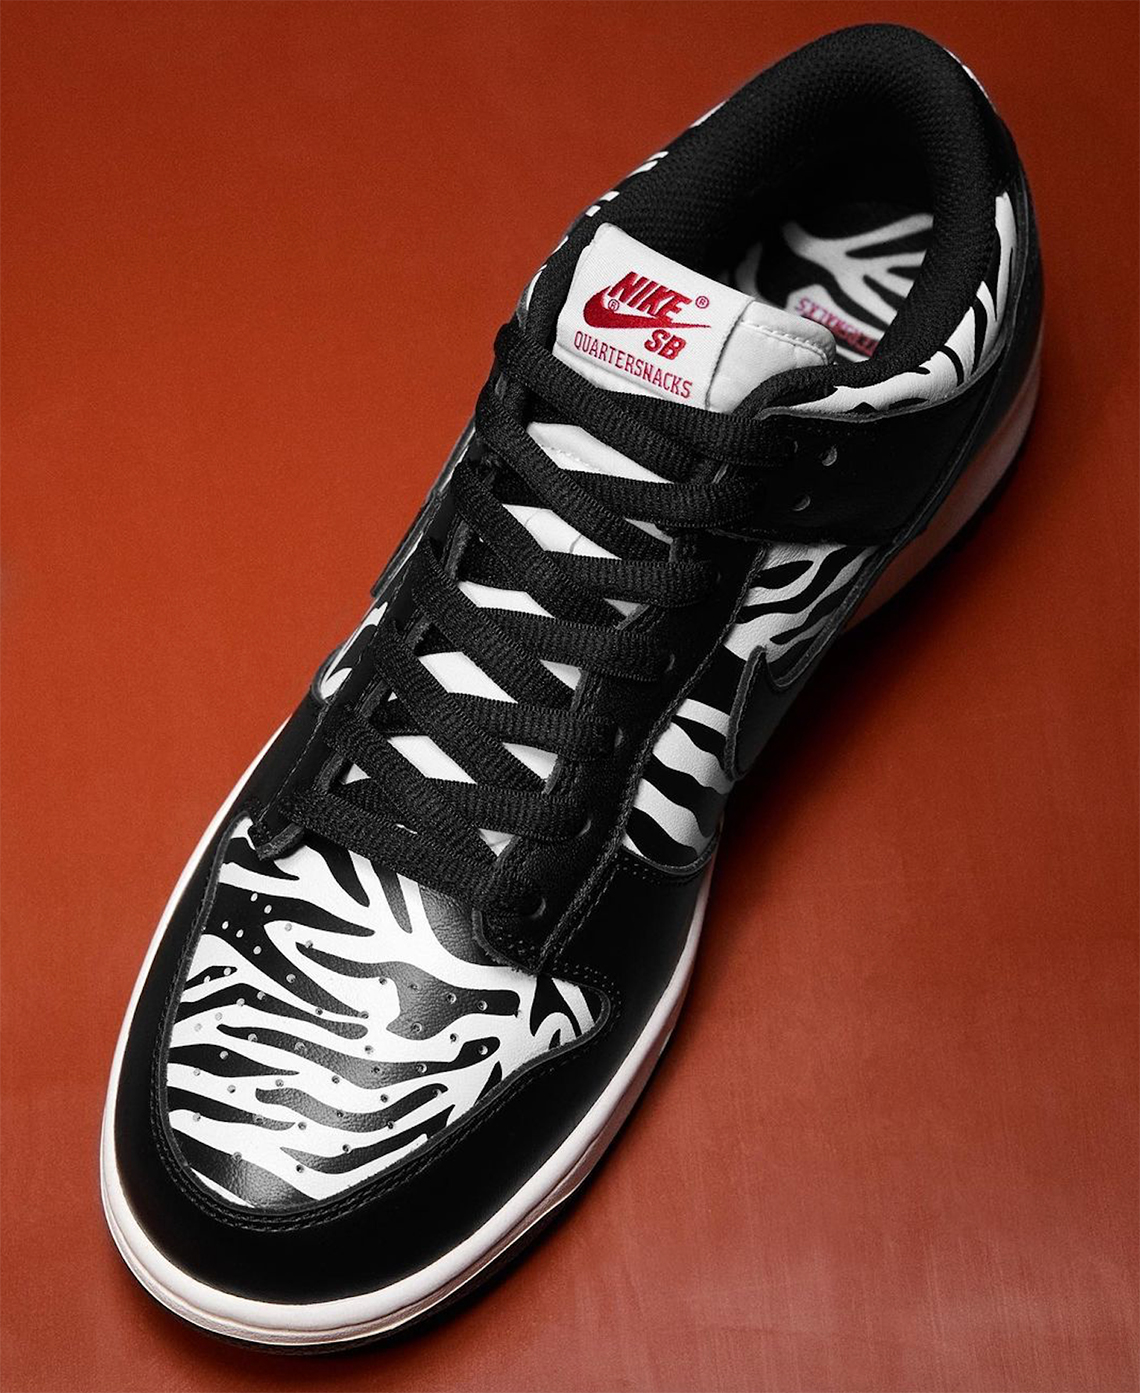 Quartersnacks Nike SB quartersnacks dunks Dunk Low DM3510-001 Release Date